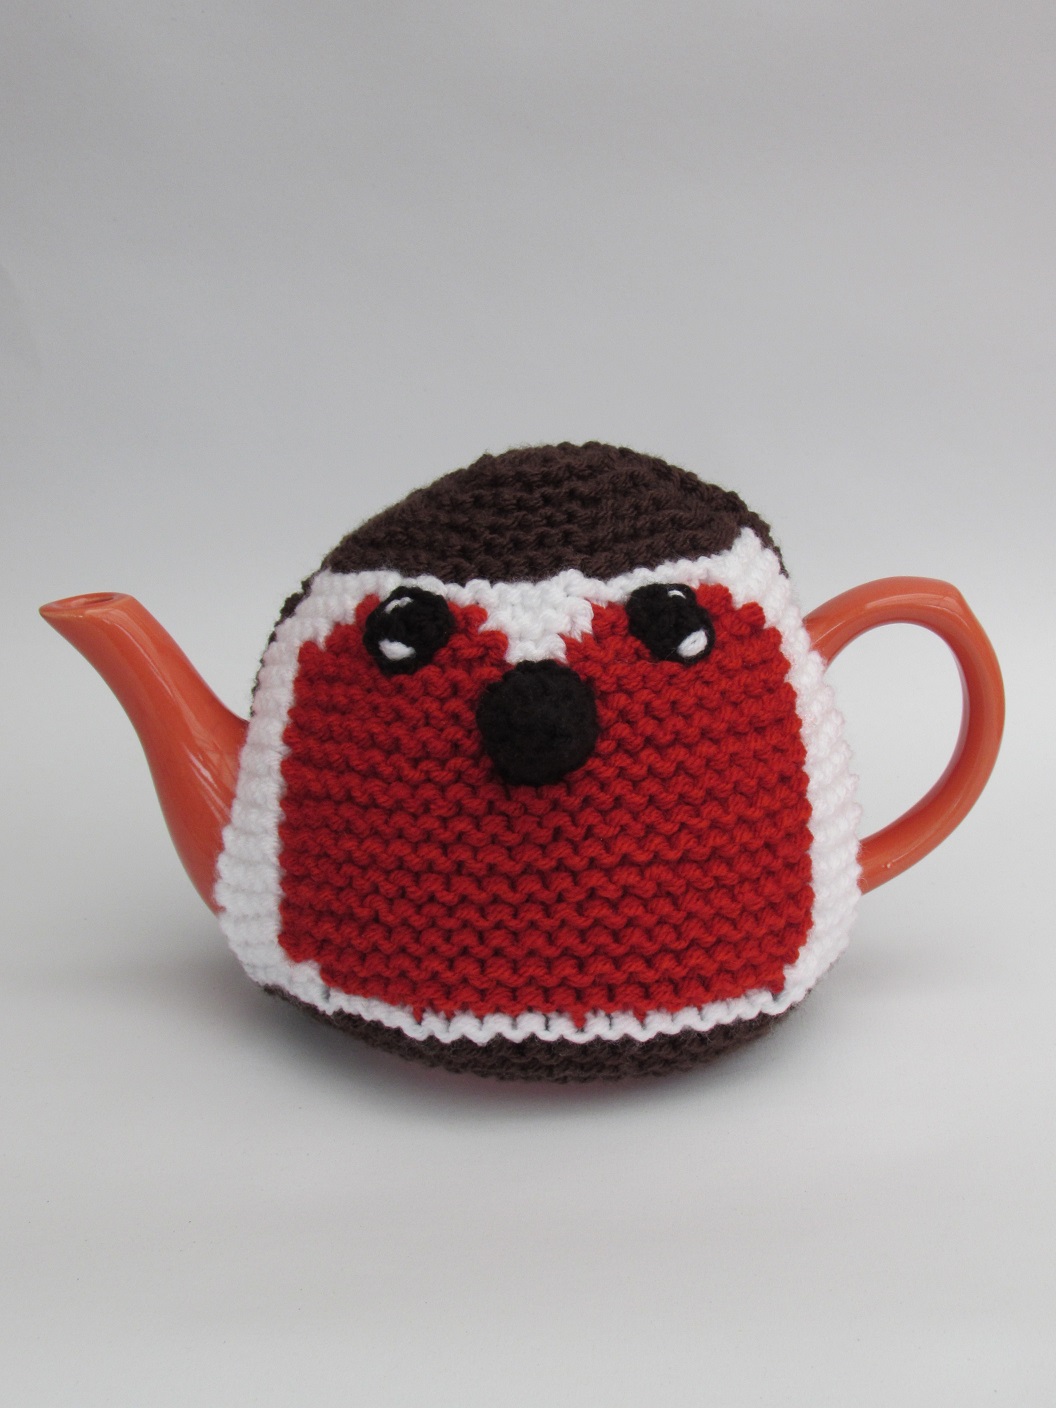 Robin Red Brest tea cosy